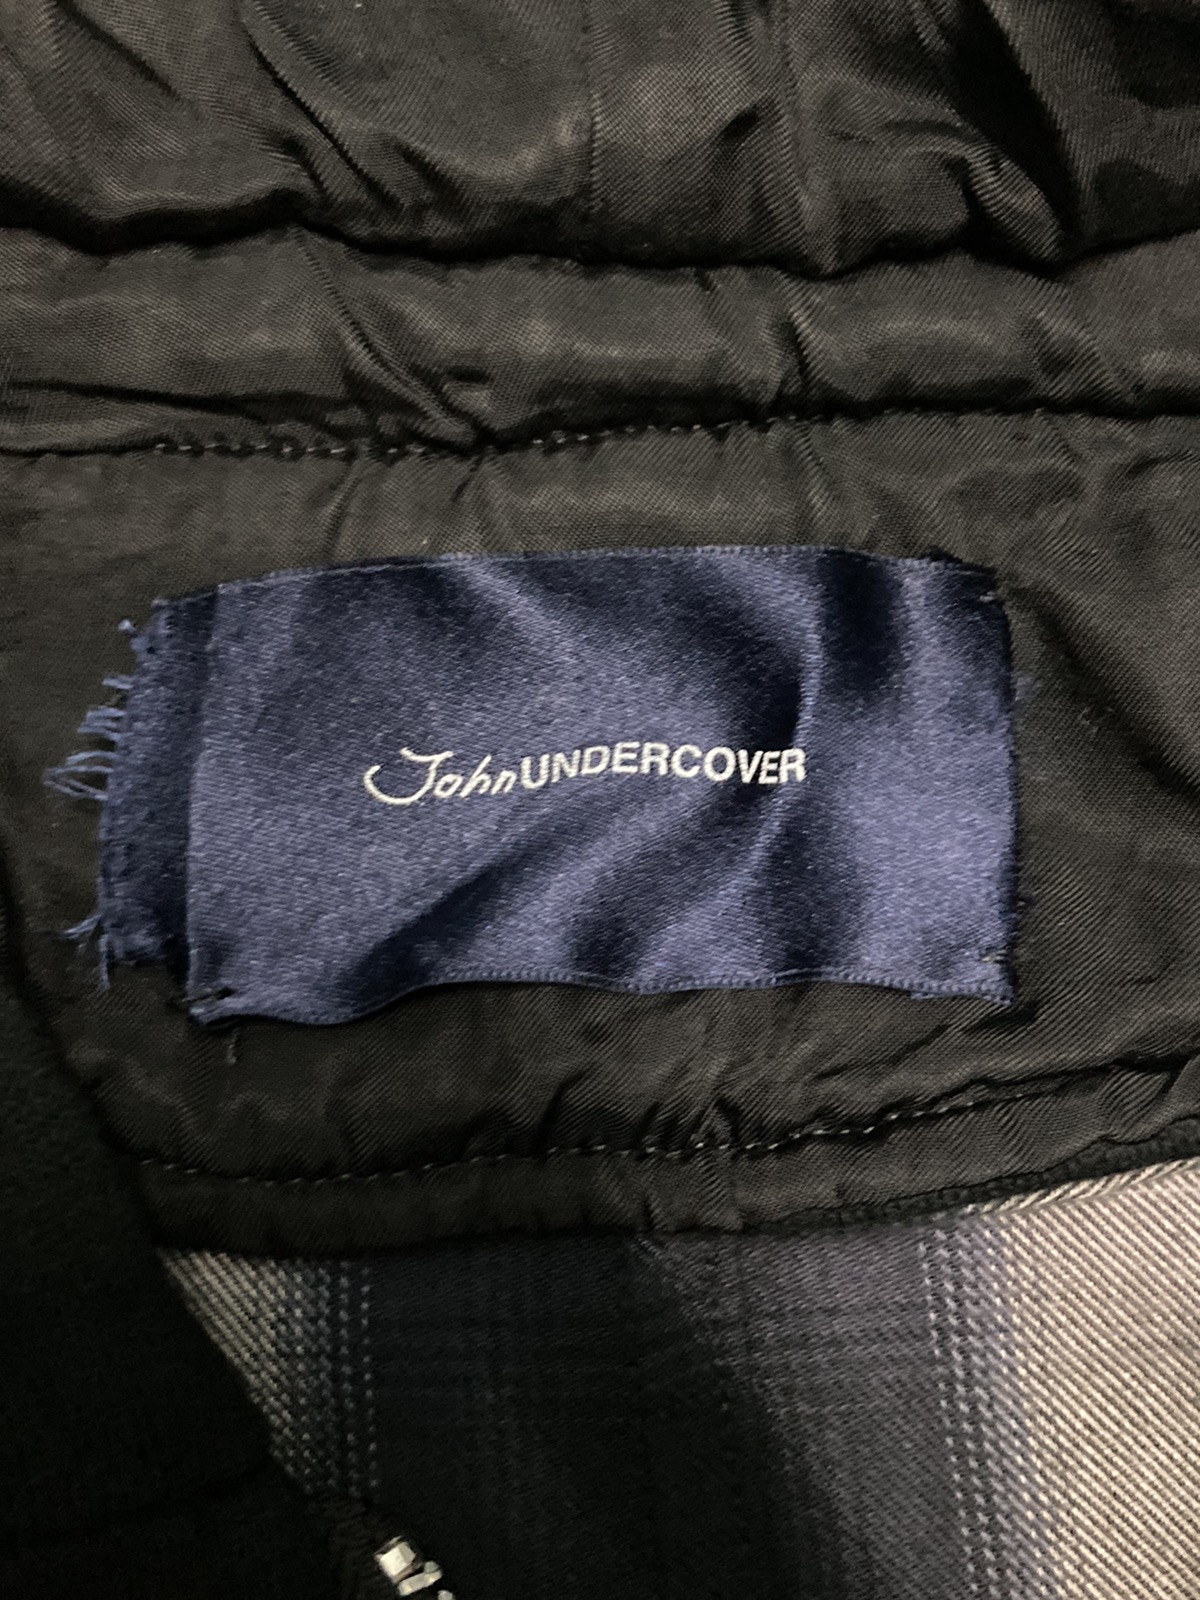 SS17 John Undercover overcoat Tartan jacket - 8